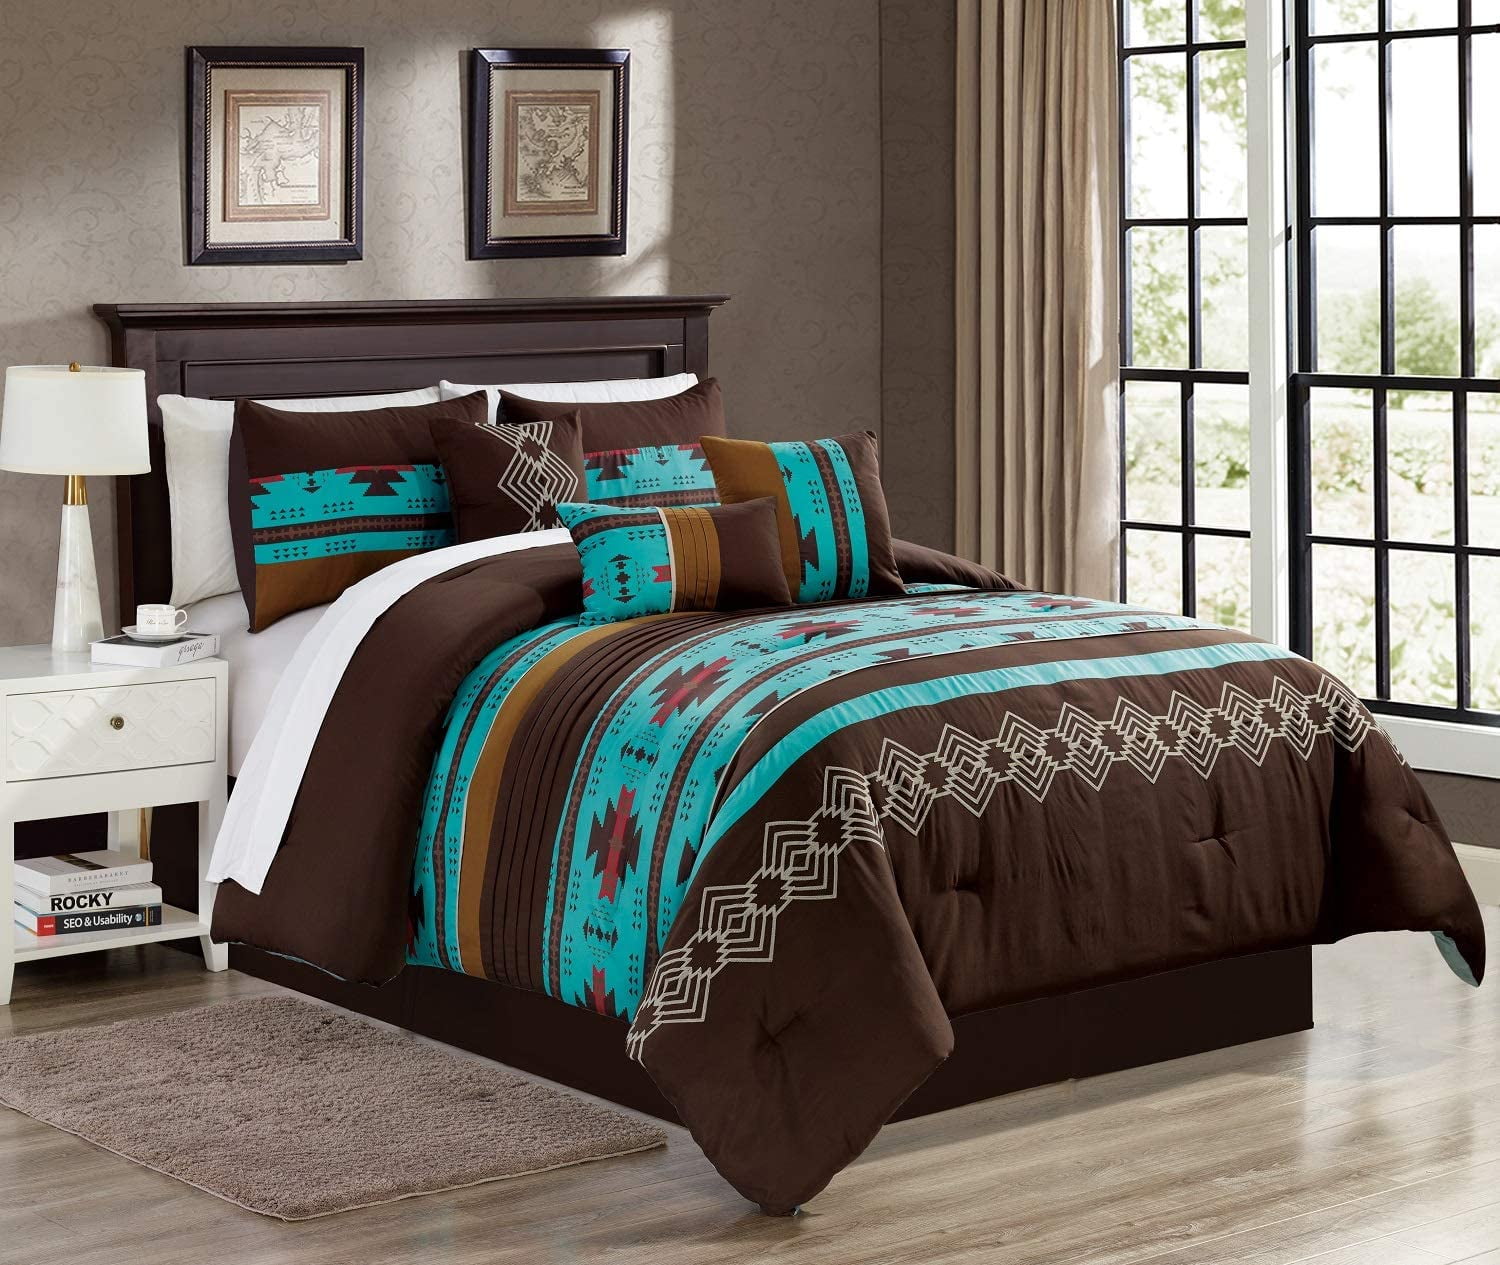 Microfiber Bedding Comforter Sets with Shams Details about   JML Comforter Set Luxury Solid C 